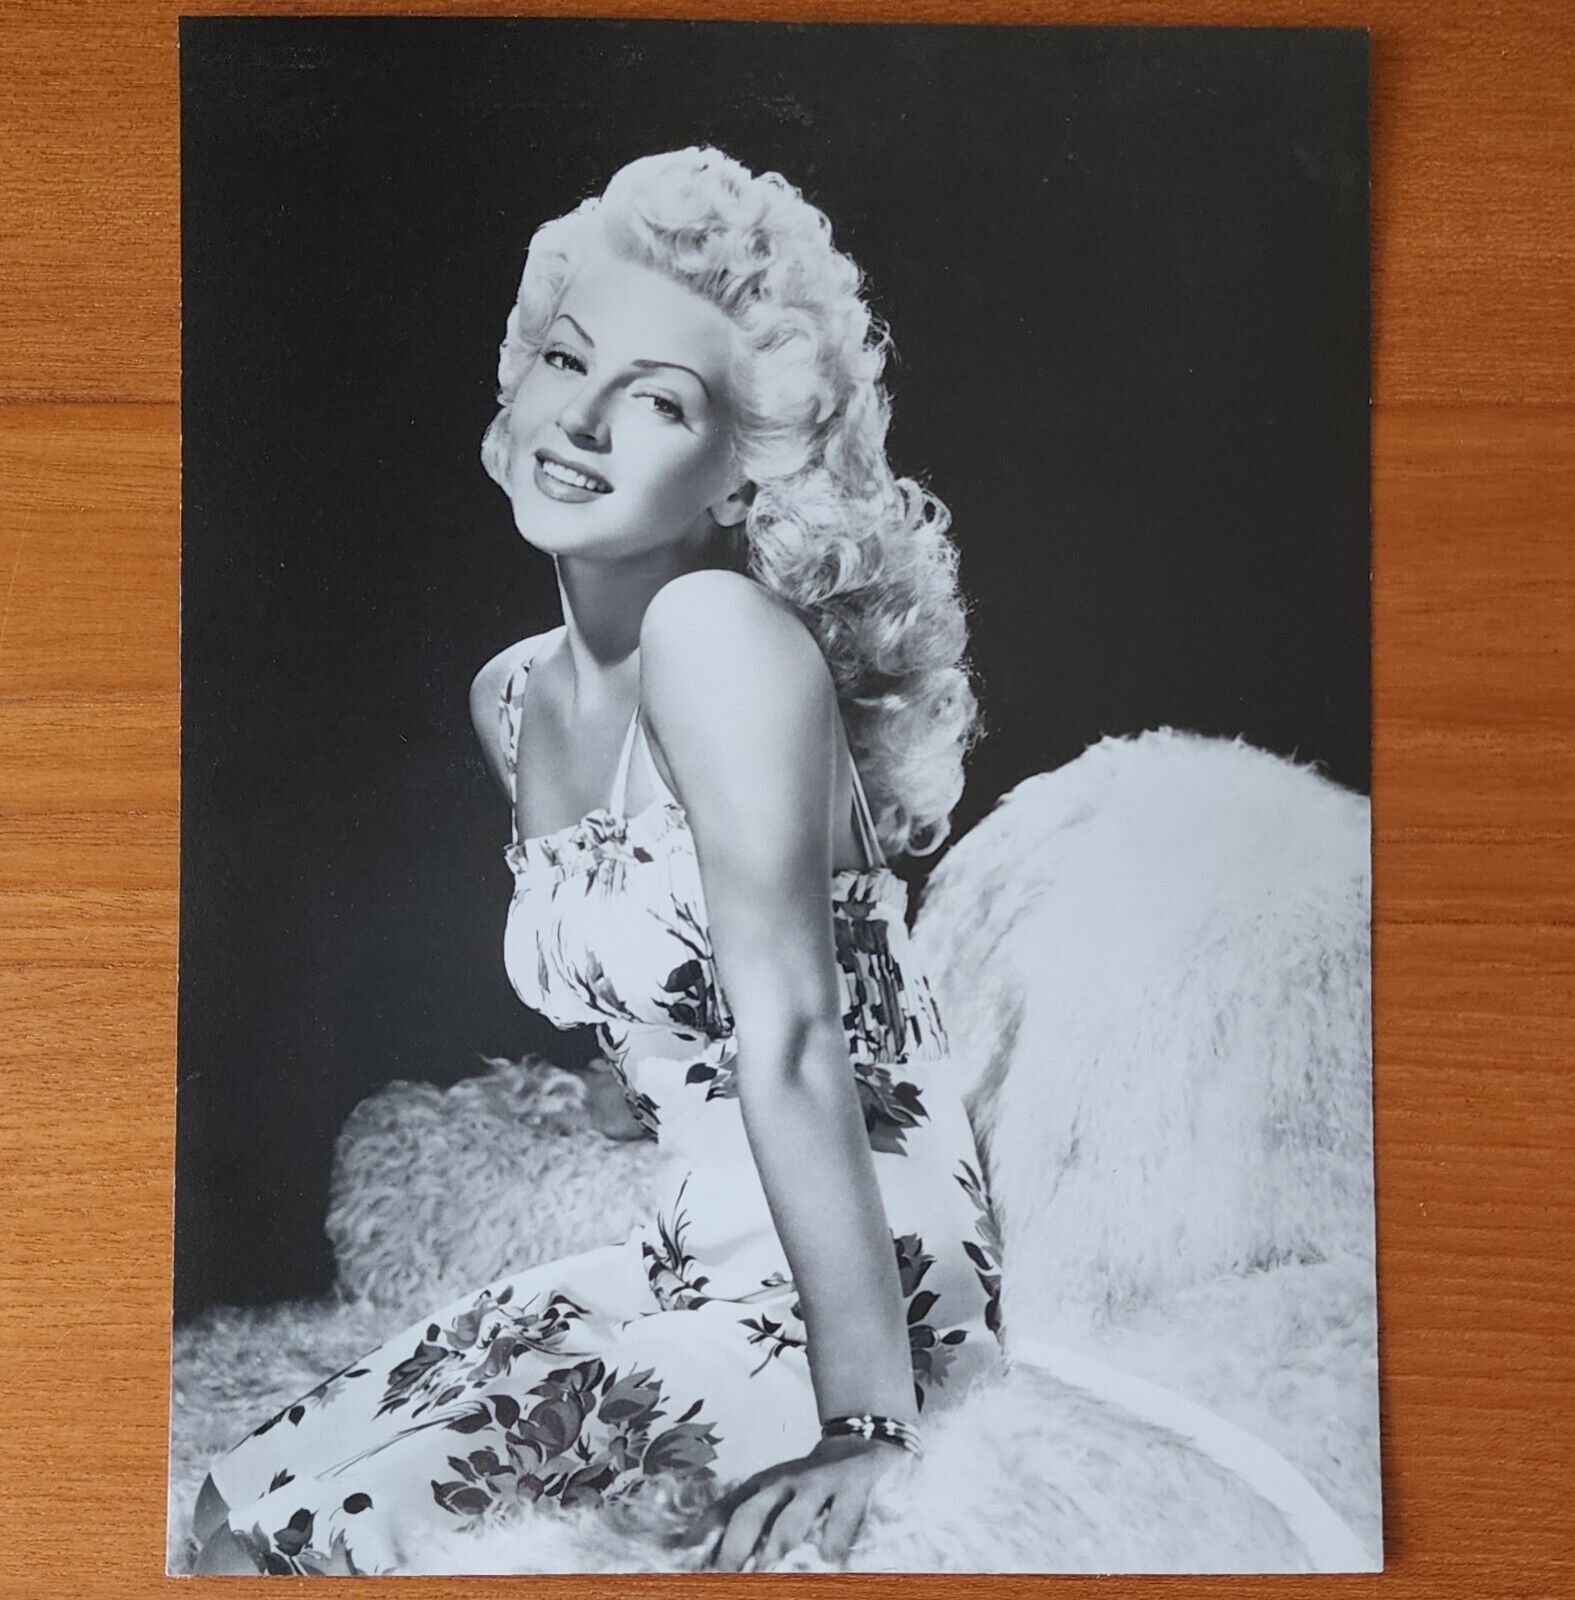 ORIGINAL 1940s LANA TURNER PUBLICITY GLAMOR PHOTO USED IN 1987 PEOPLE MAGAZINE